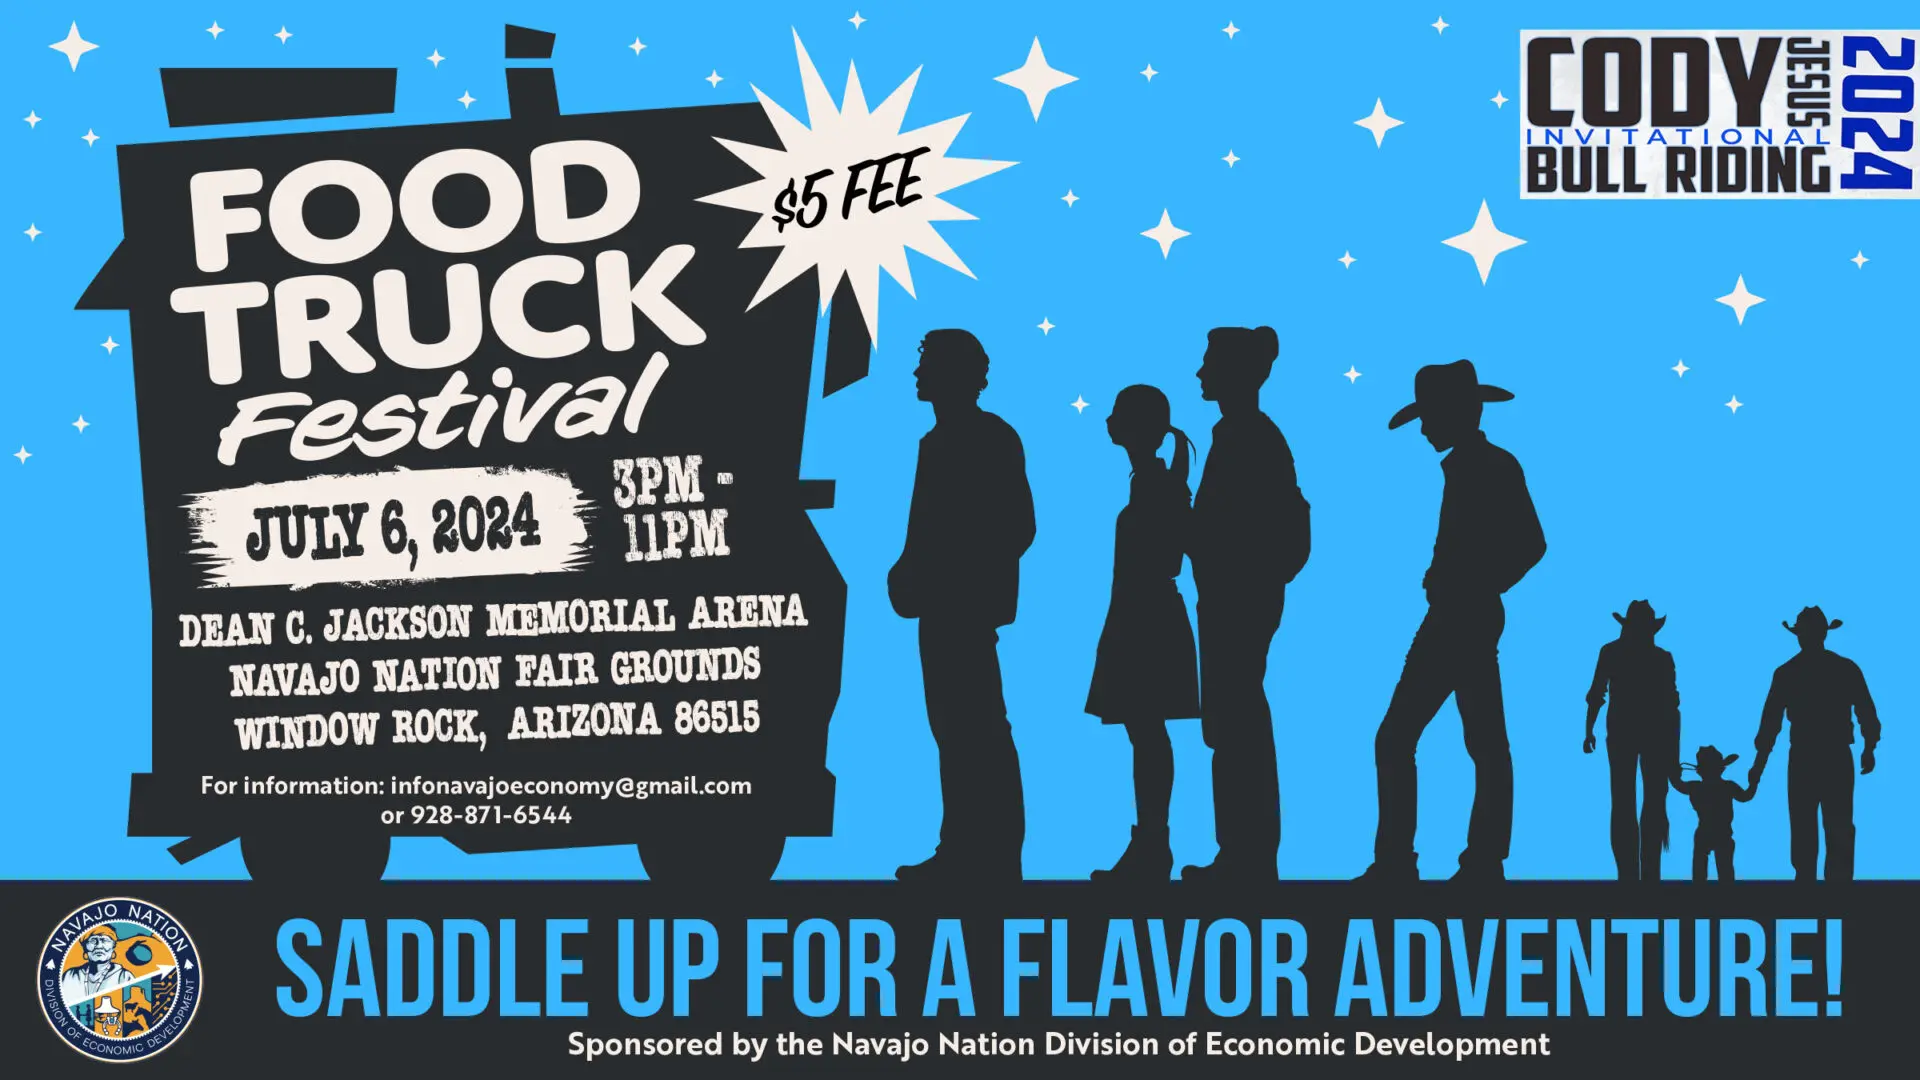 Food Truck Festival @ Cody Jesus Invitational, July 6, 2024